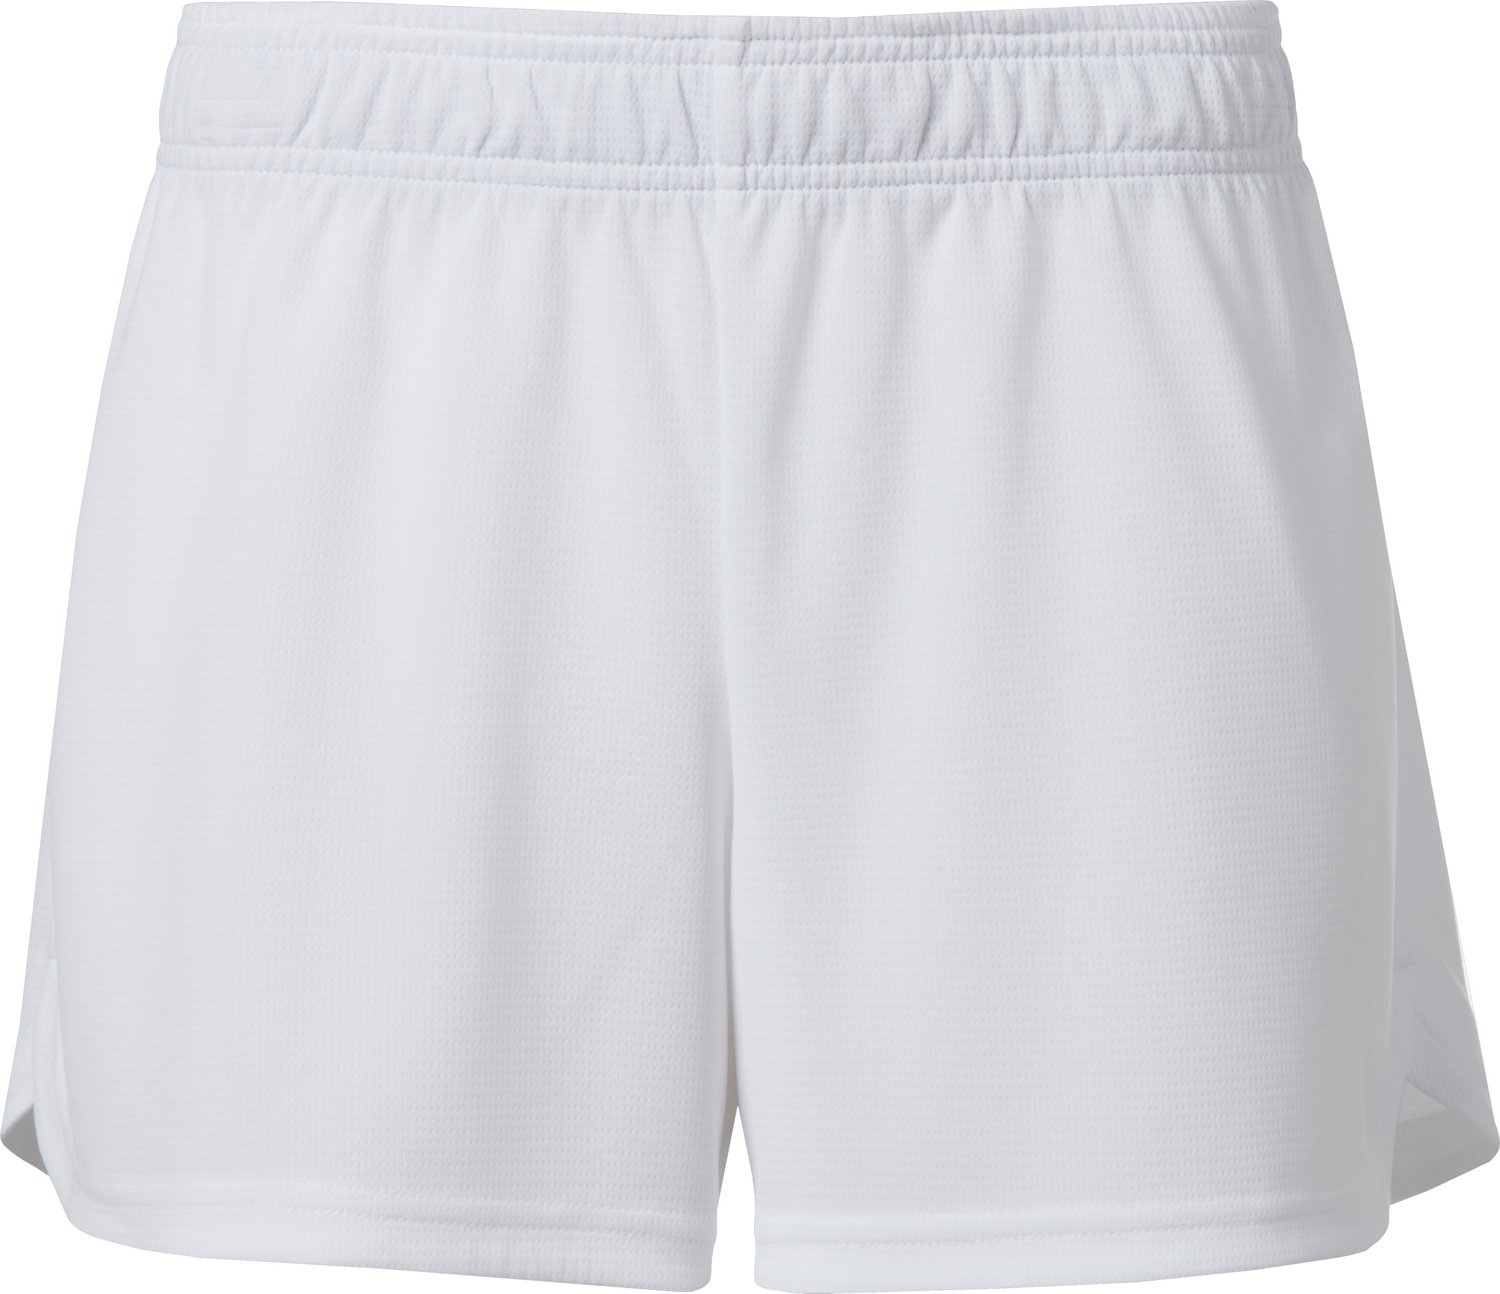 Micro Mesh Short, Women's Ink Tennis Shorts